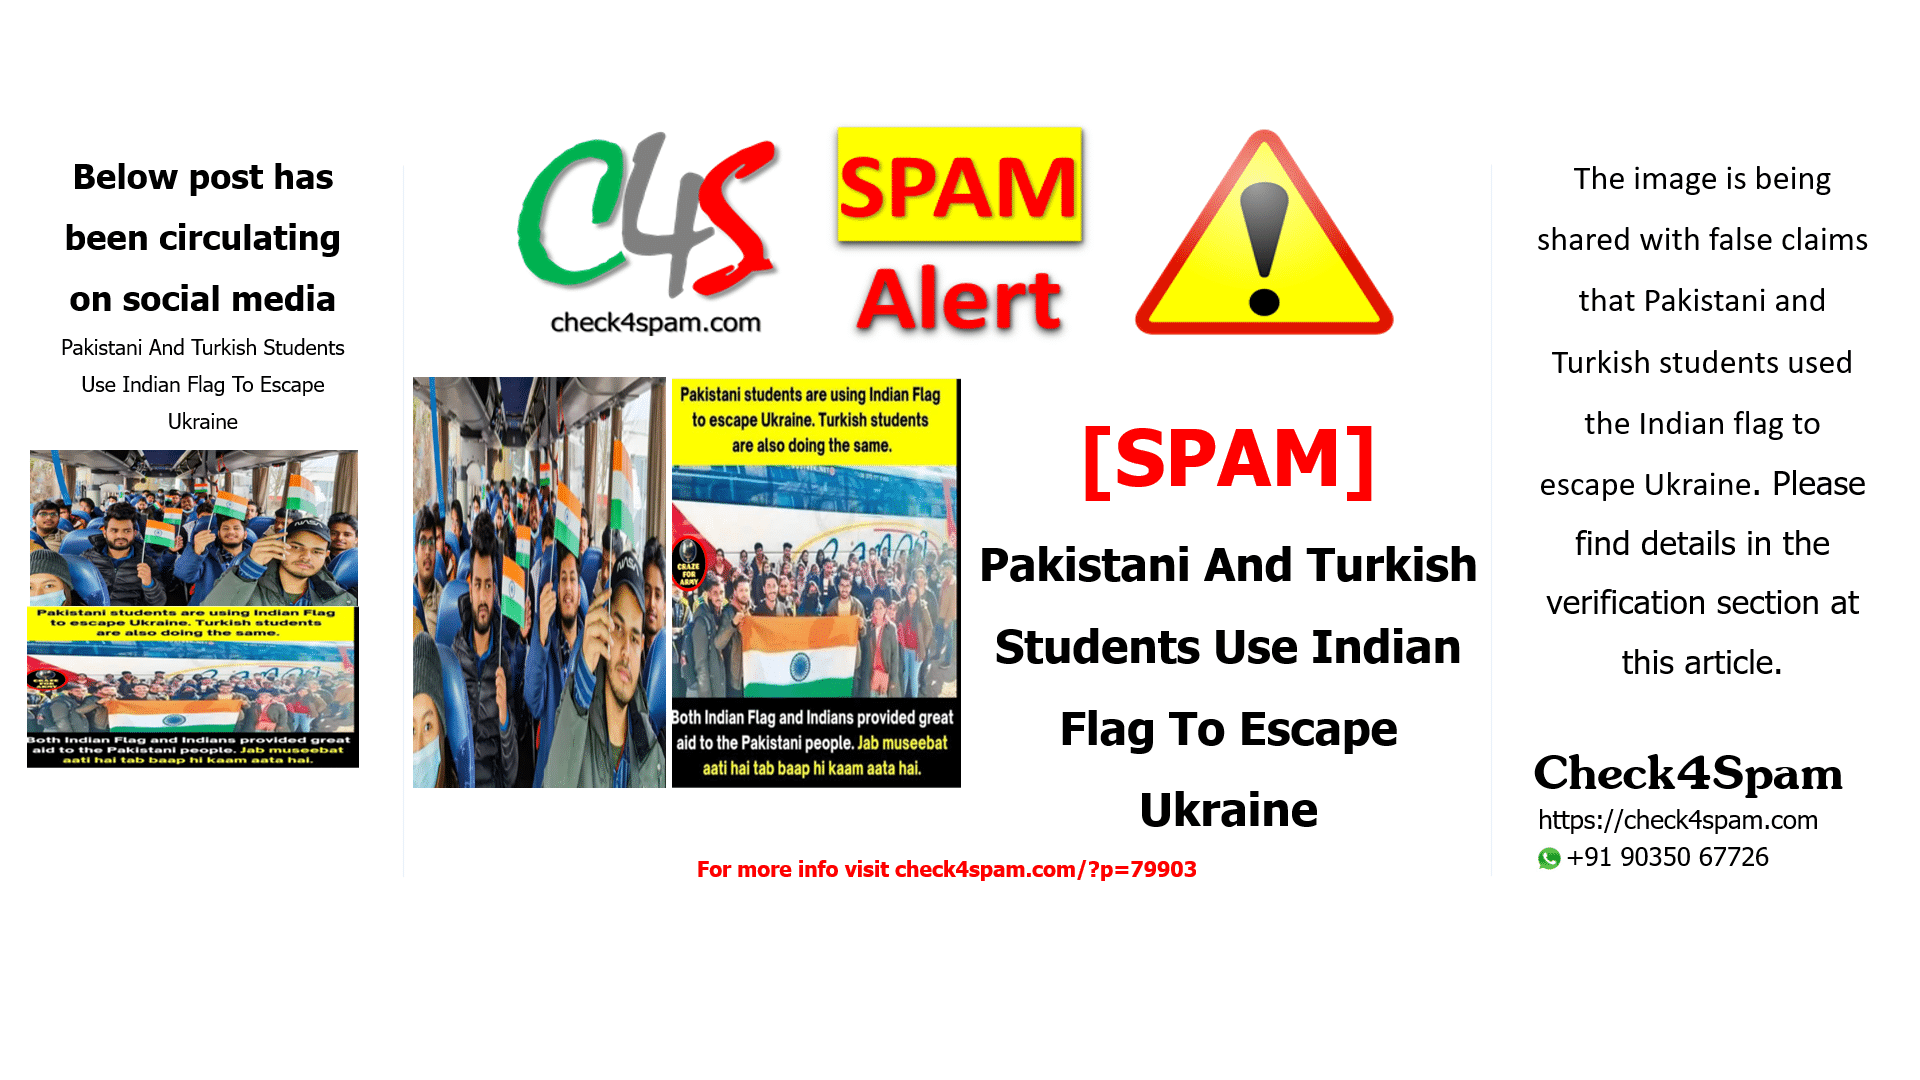 Pakistani And Turkish Students Use Indian Flag To Escape Ukraine